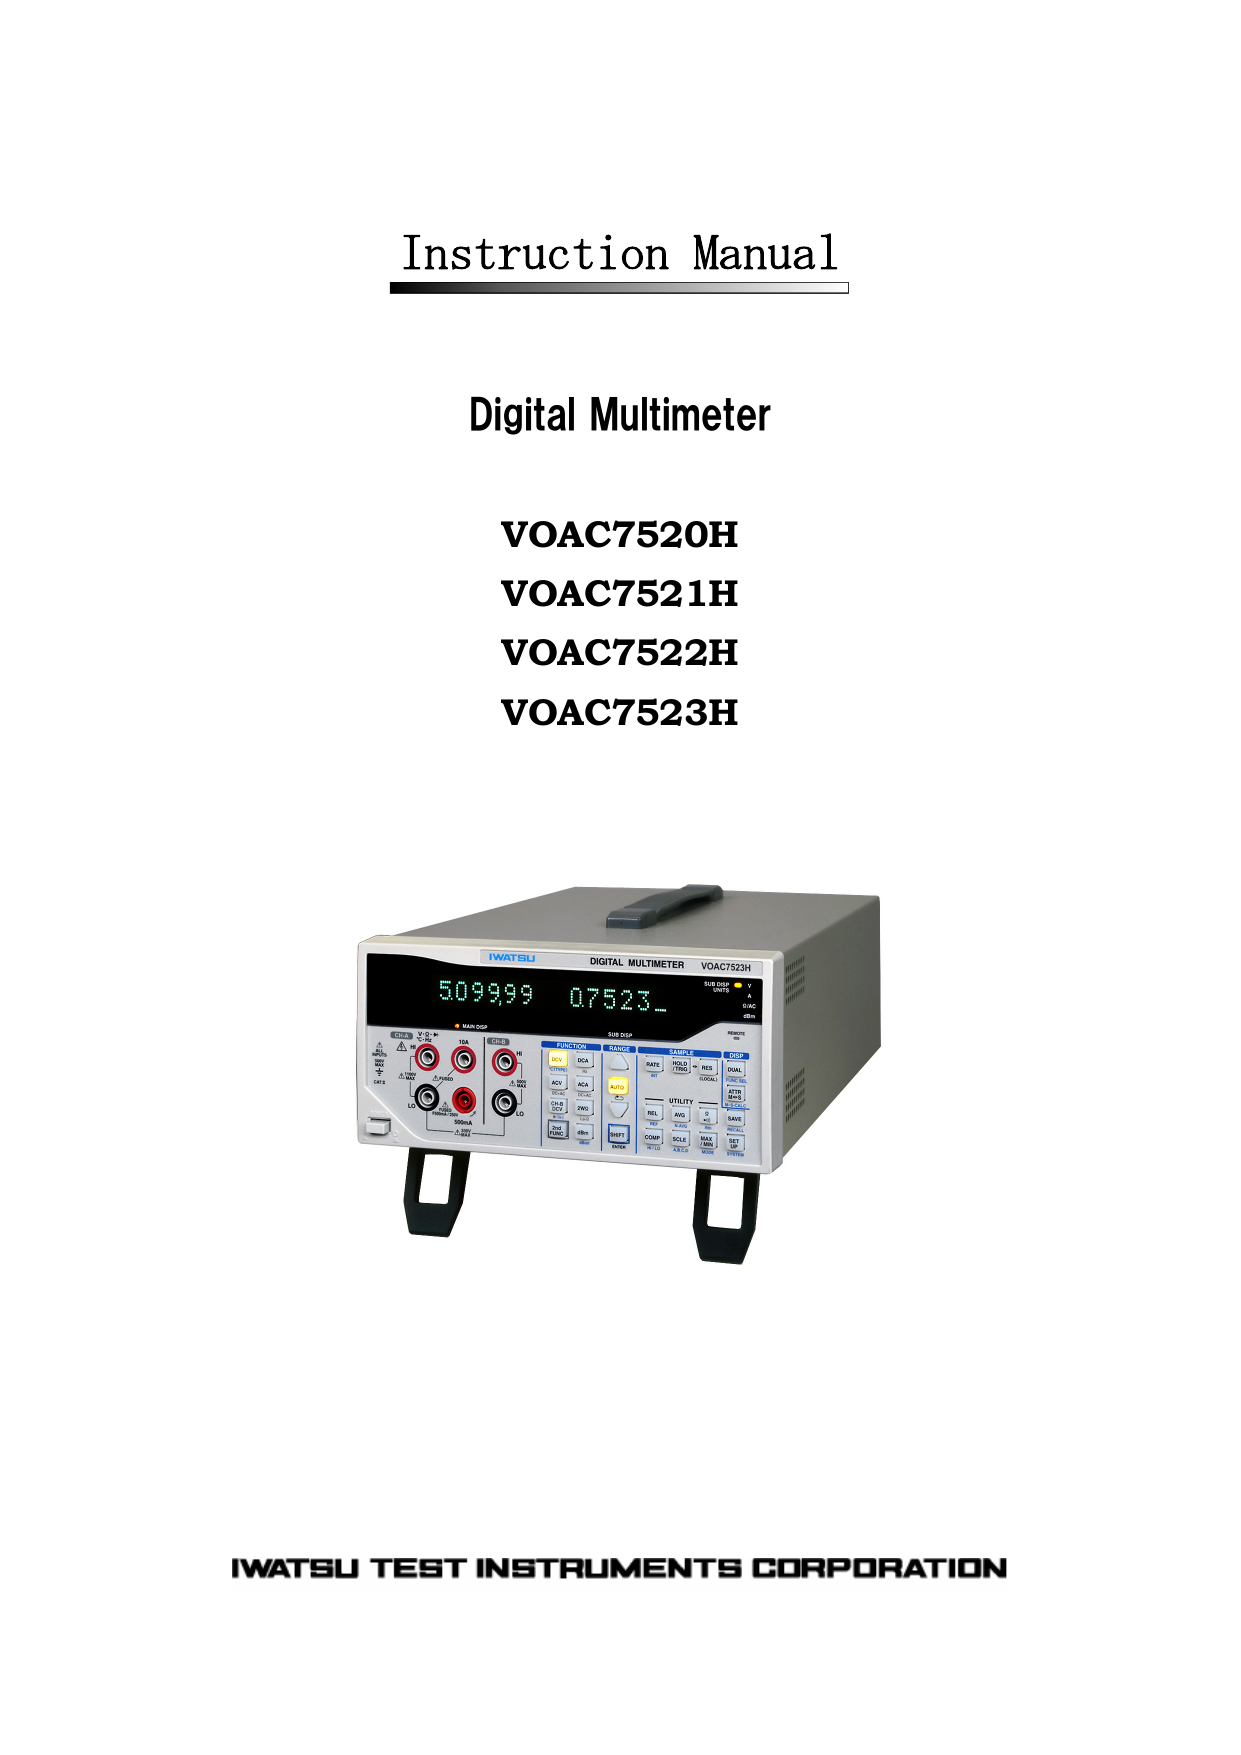 Digital Multimeter VOAC752XH Instruction Manual | Manualzz